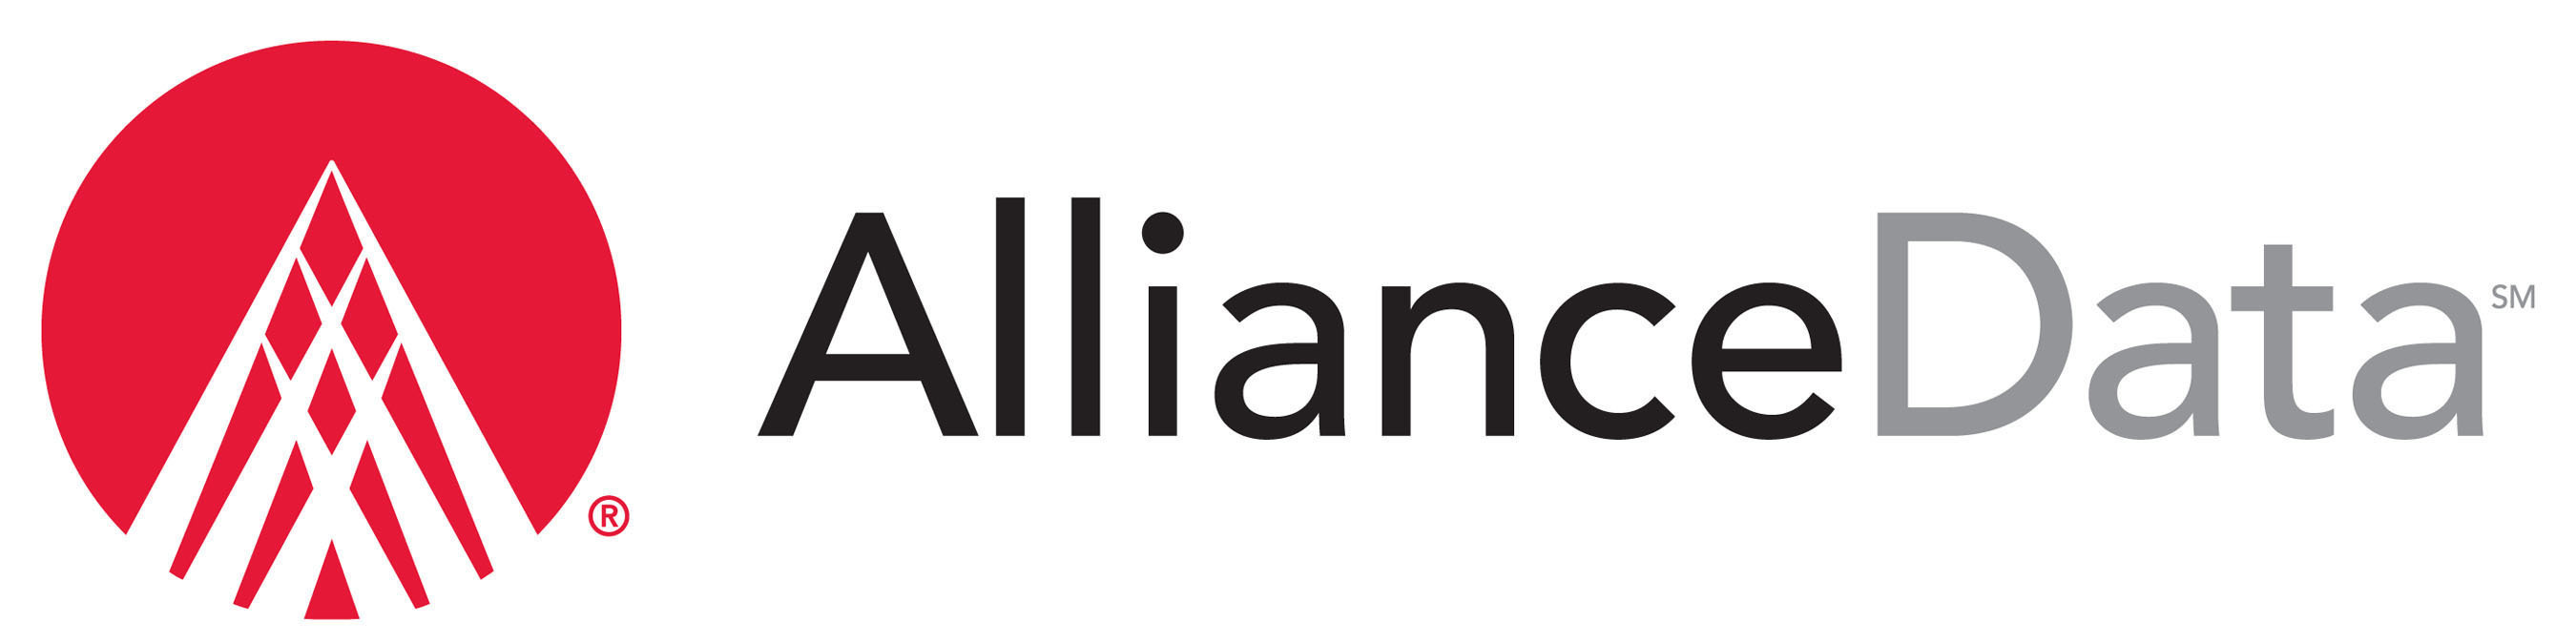 Alliance Data logo. (PRNewsFoto) (PRNewsFoto/)